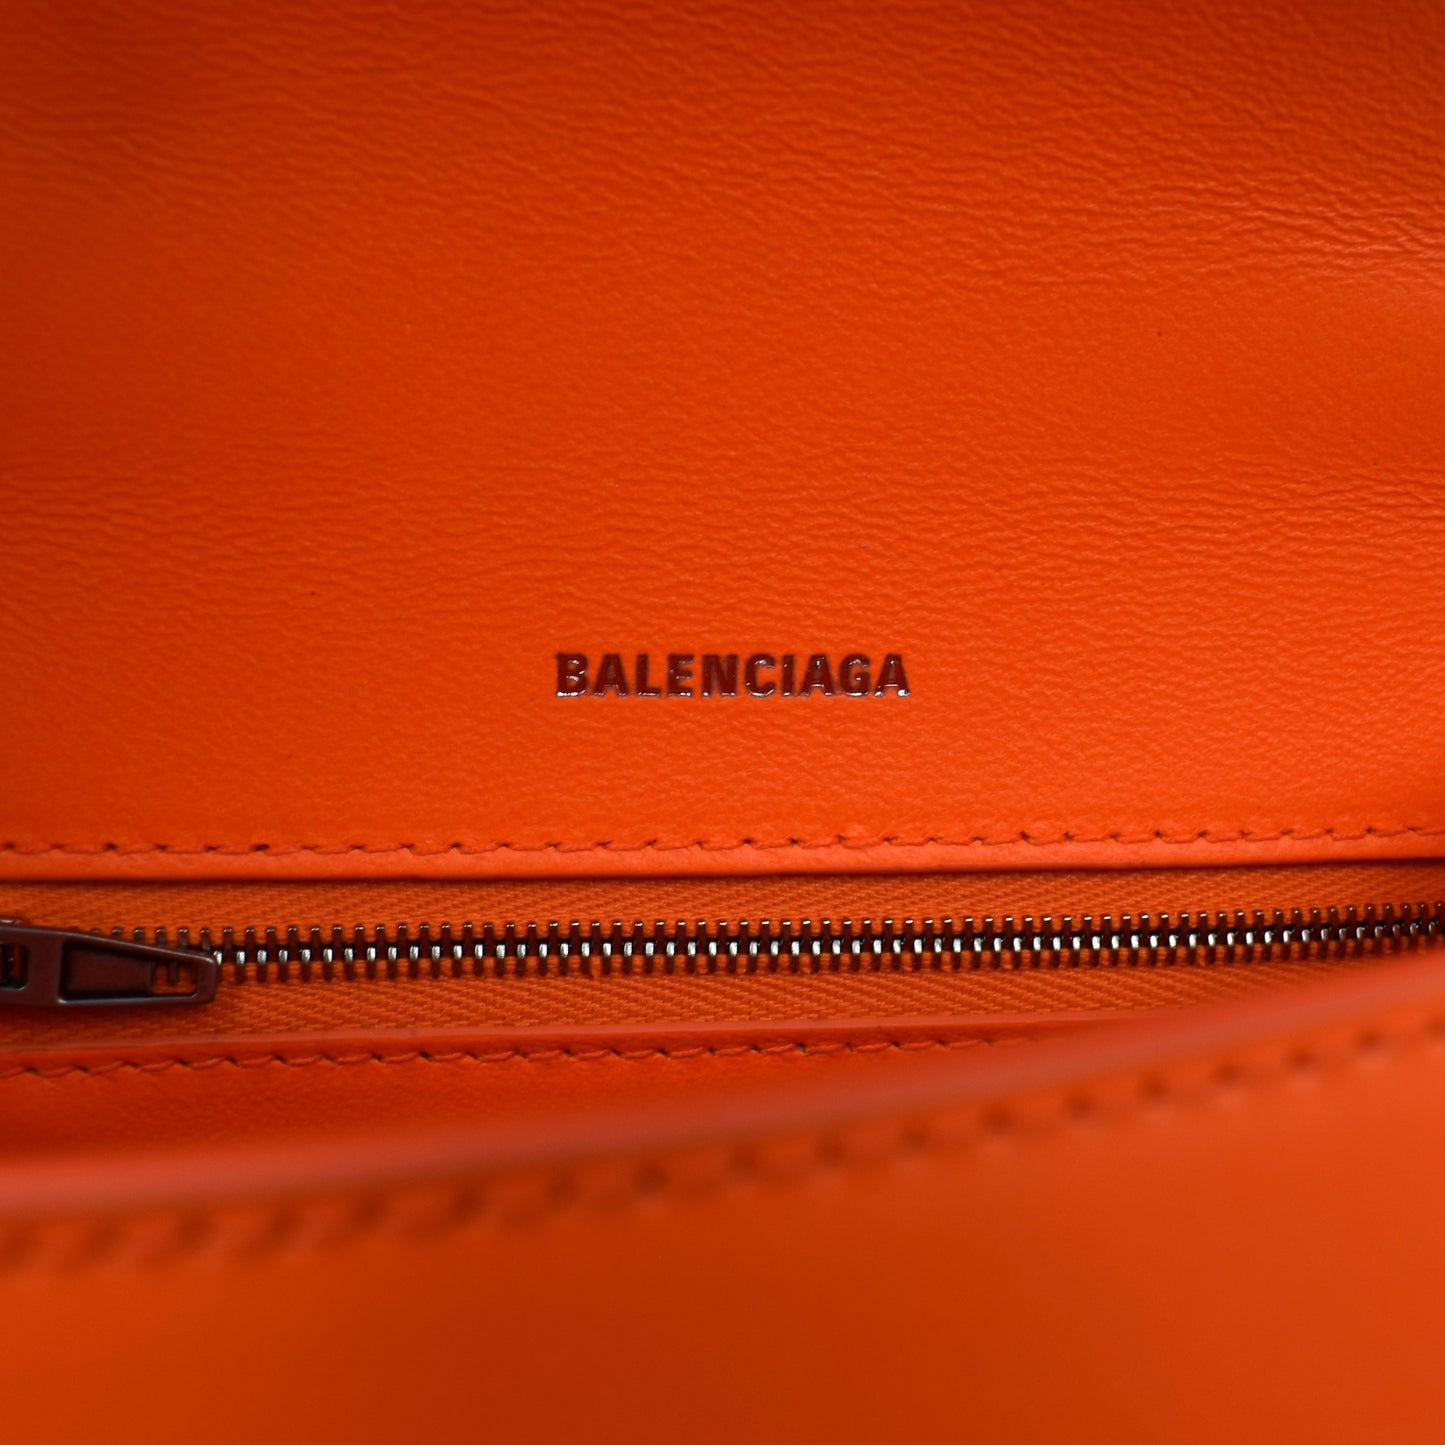 Balenciaga - Small Leather Hourglass Bag (Fluo Orange)